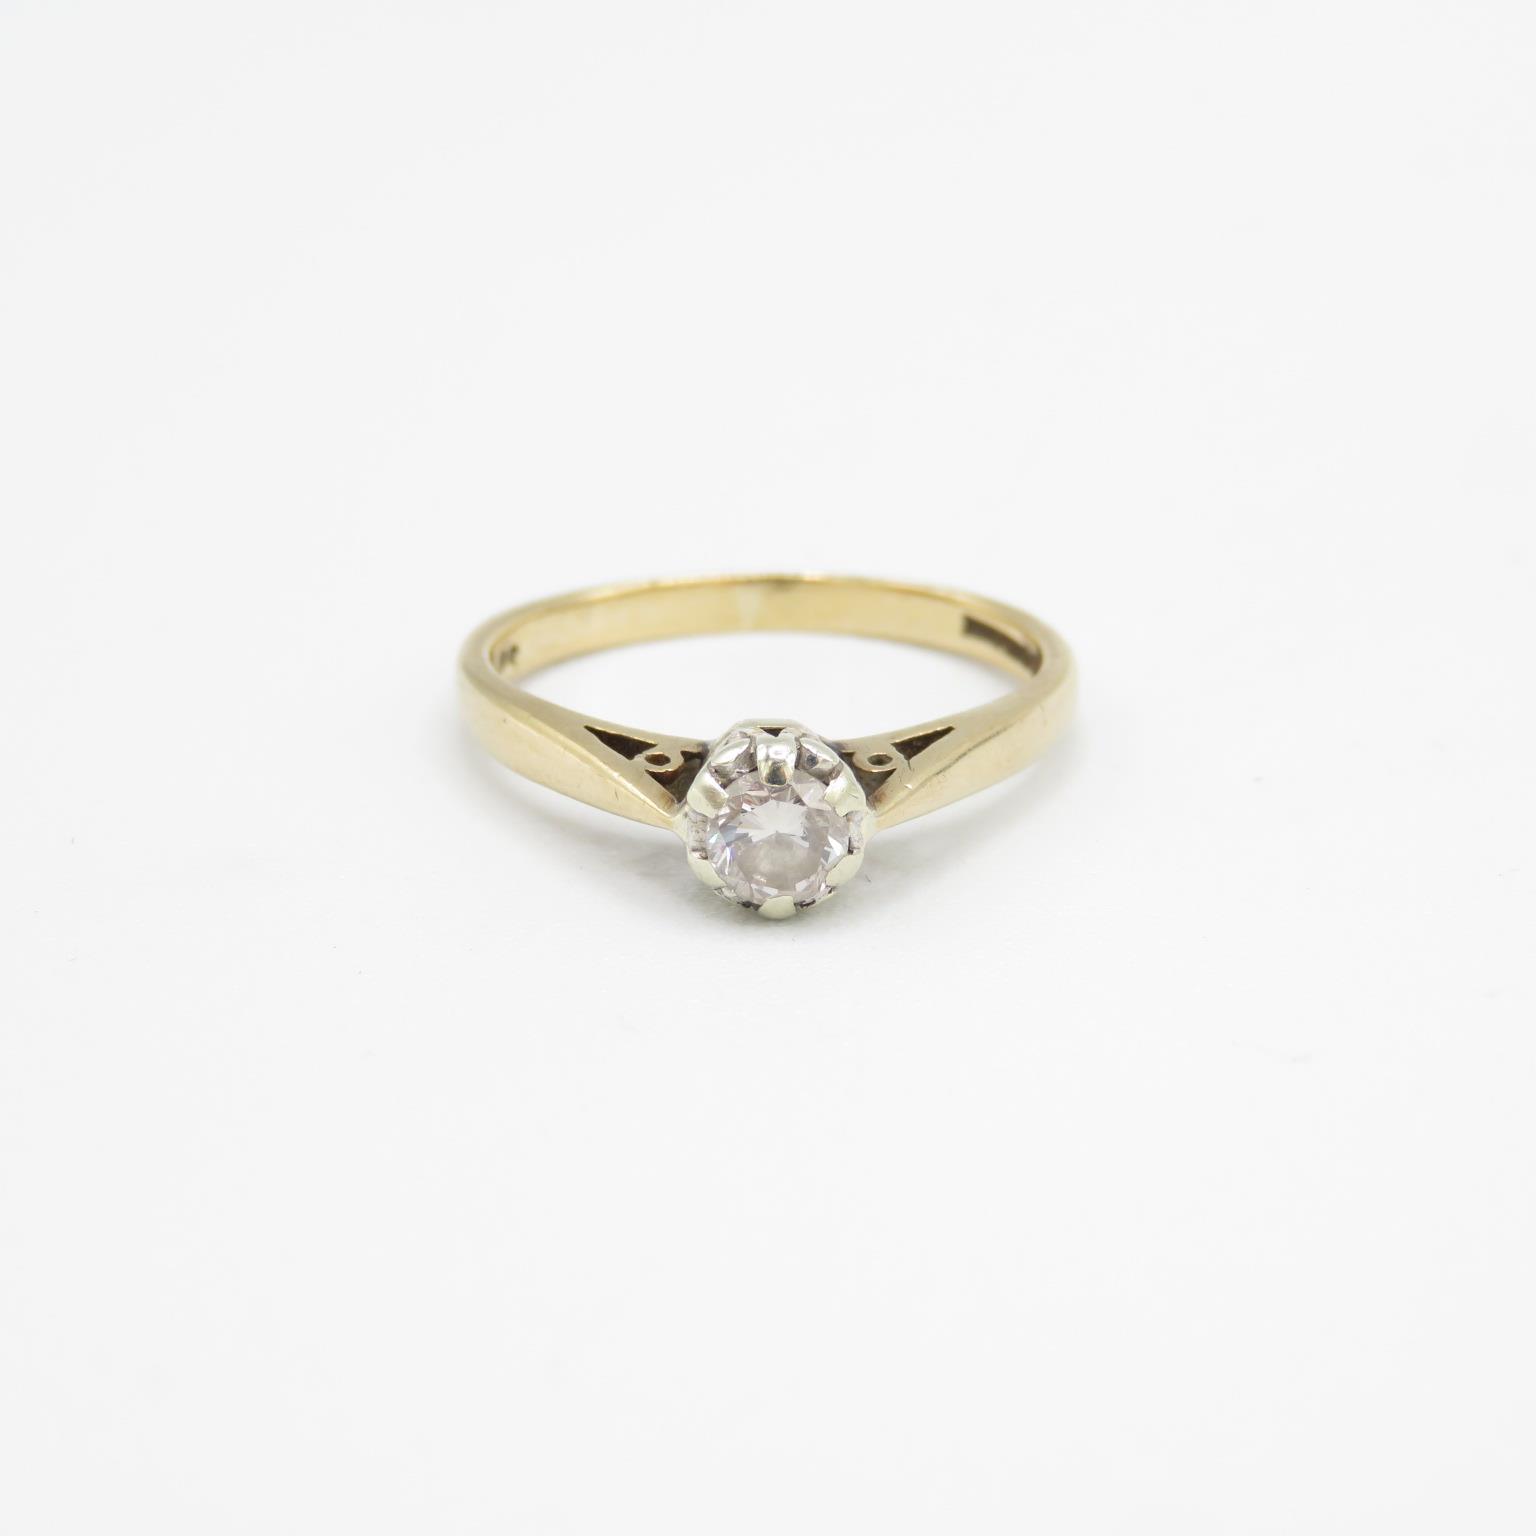 9ct gold round brilliant diamond single stone ring Size M - 2 g